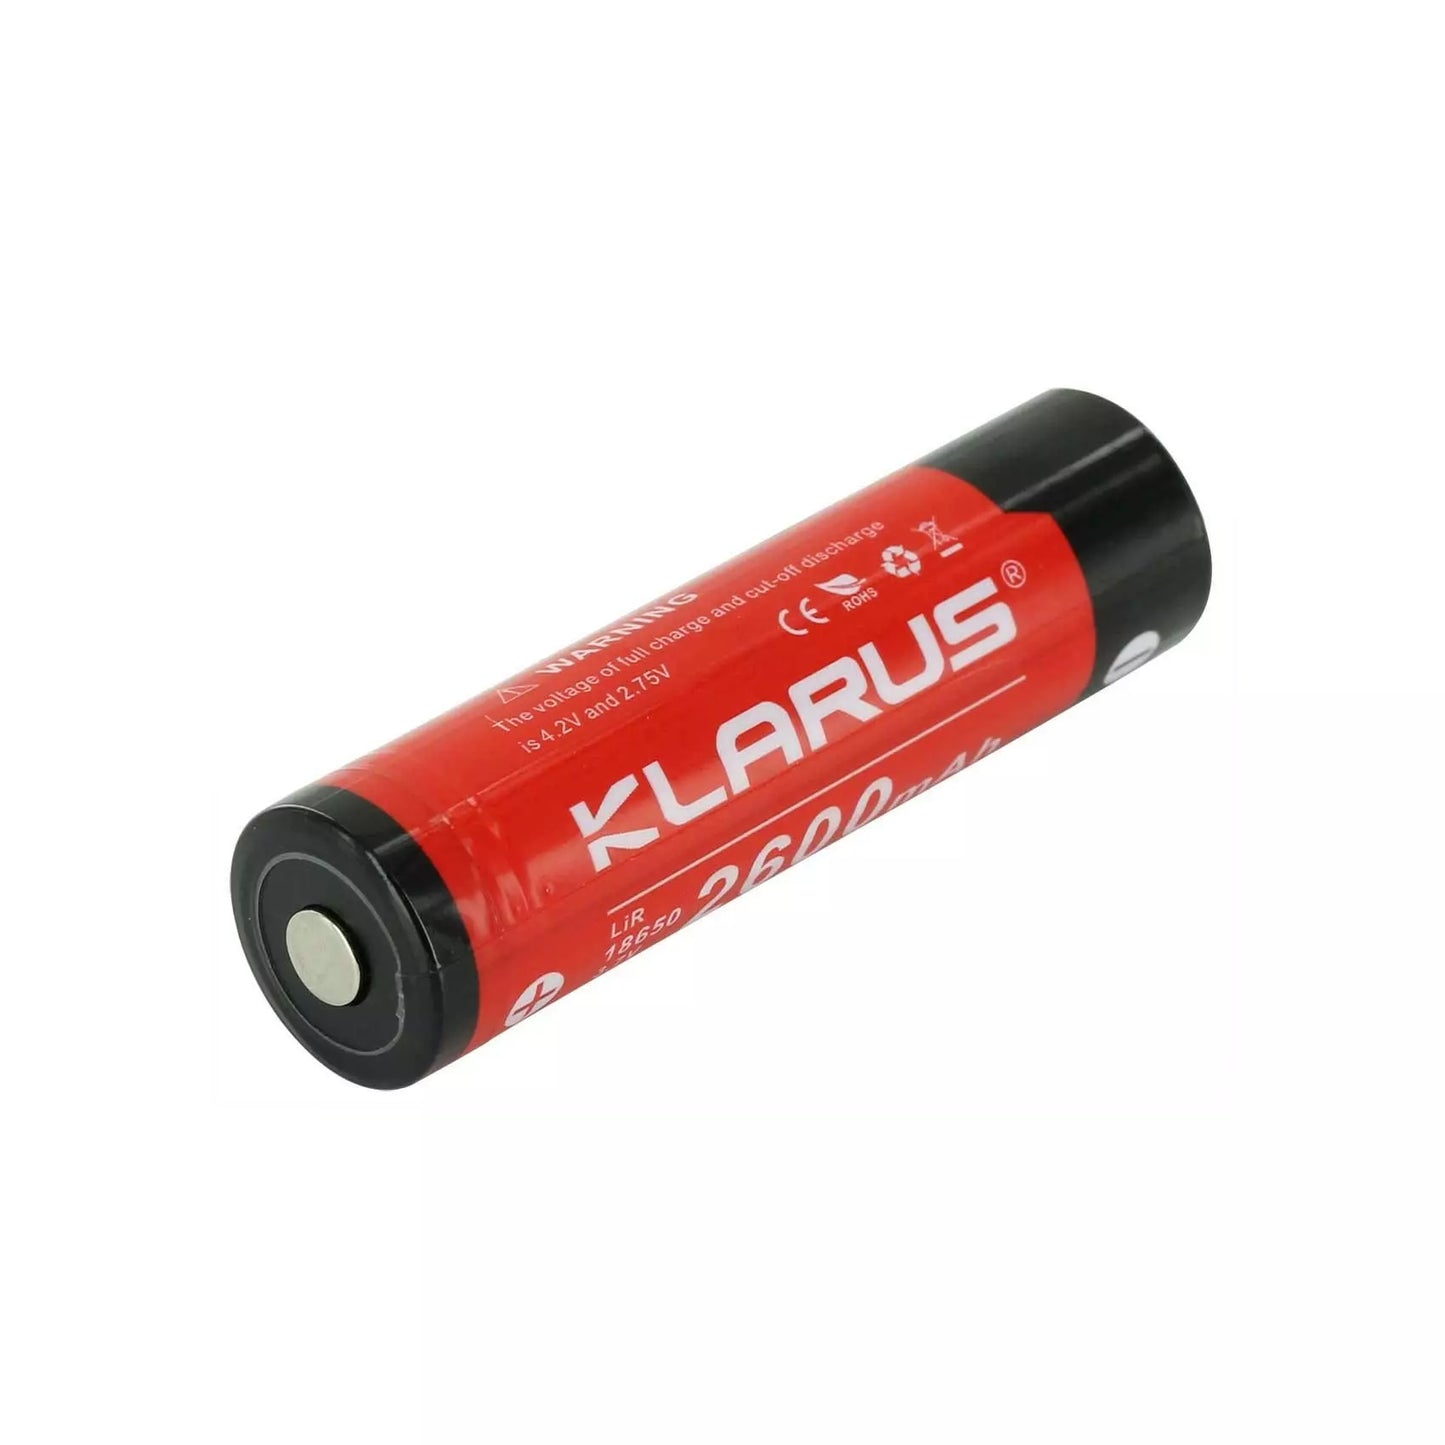 Klarus 2600mAh Rechargeable 18650 Battery